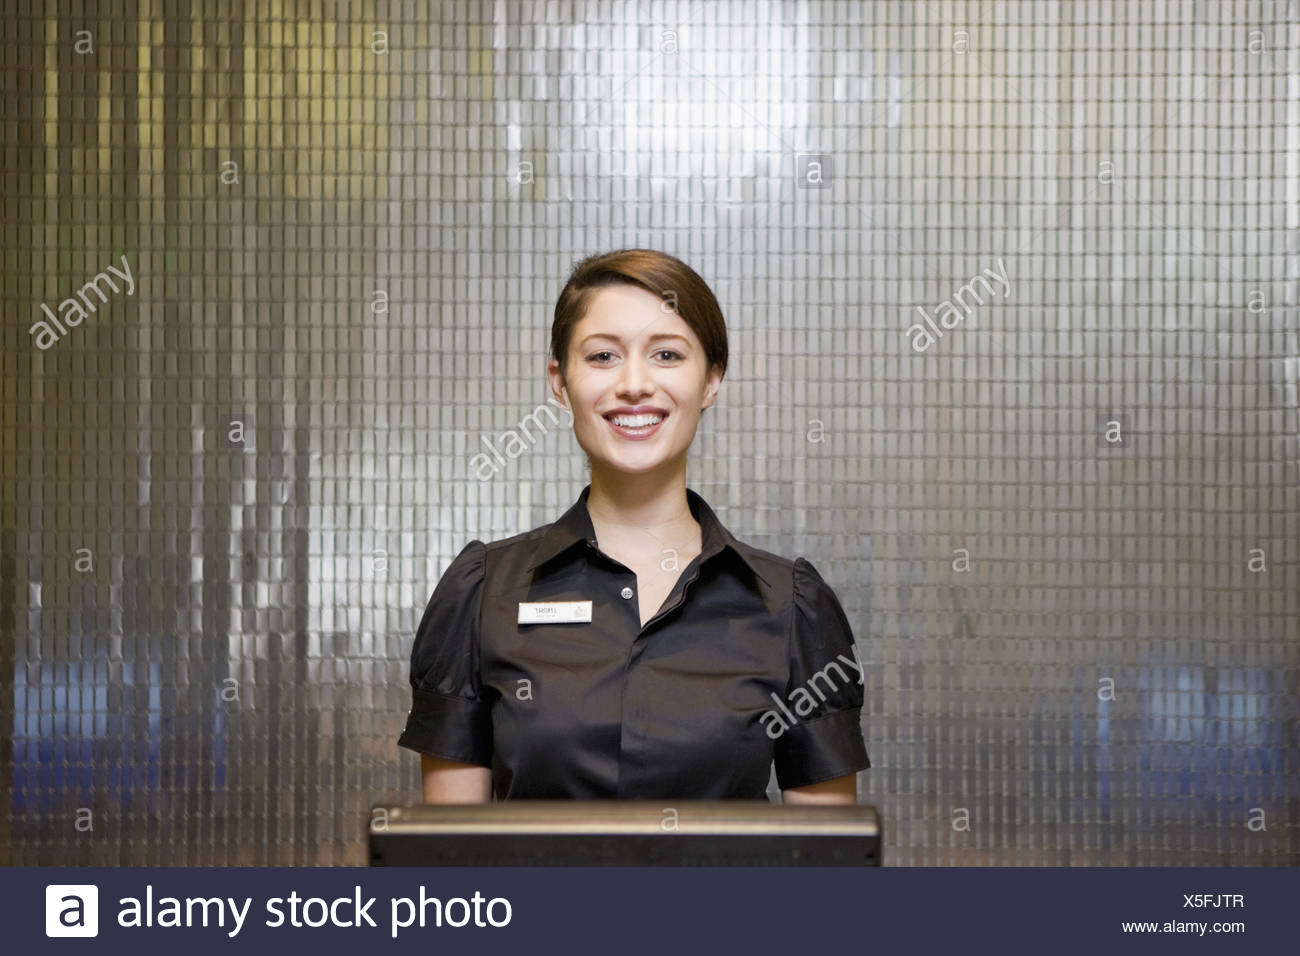 Female Hotel Front Desk Clerk Stock Photo 278783255 Alamy